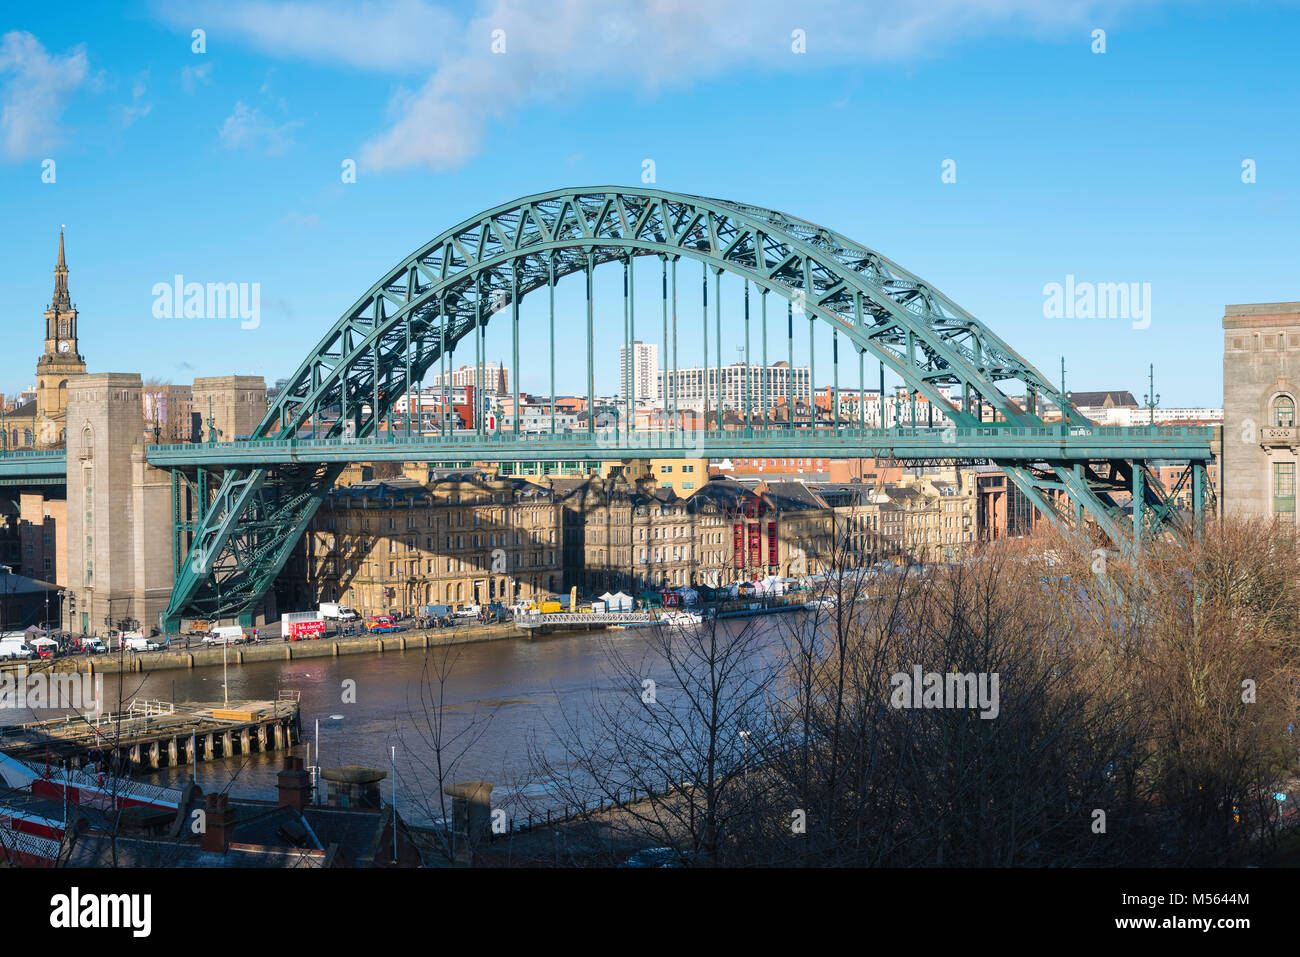 Newcastle upon Tyne, view of the landmark Tyne Bridge spanning the River Tyne in Newcastle, Tyne And Wear, England, UK Stock Photo